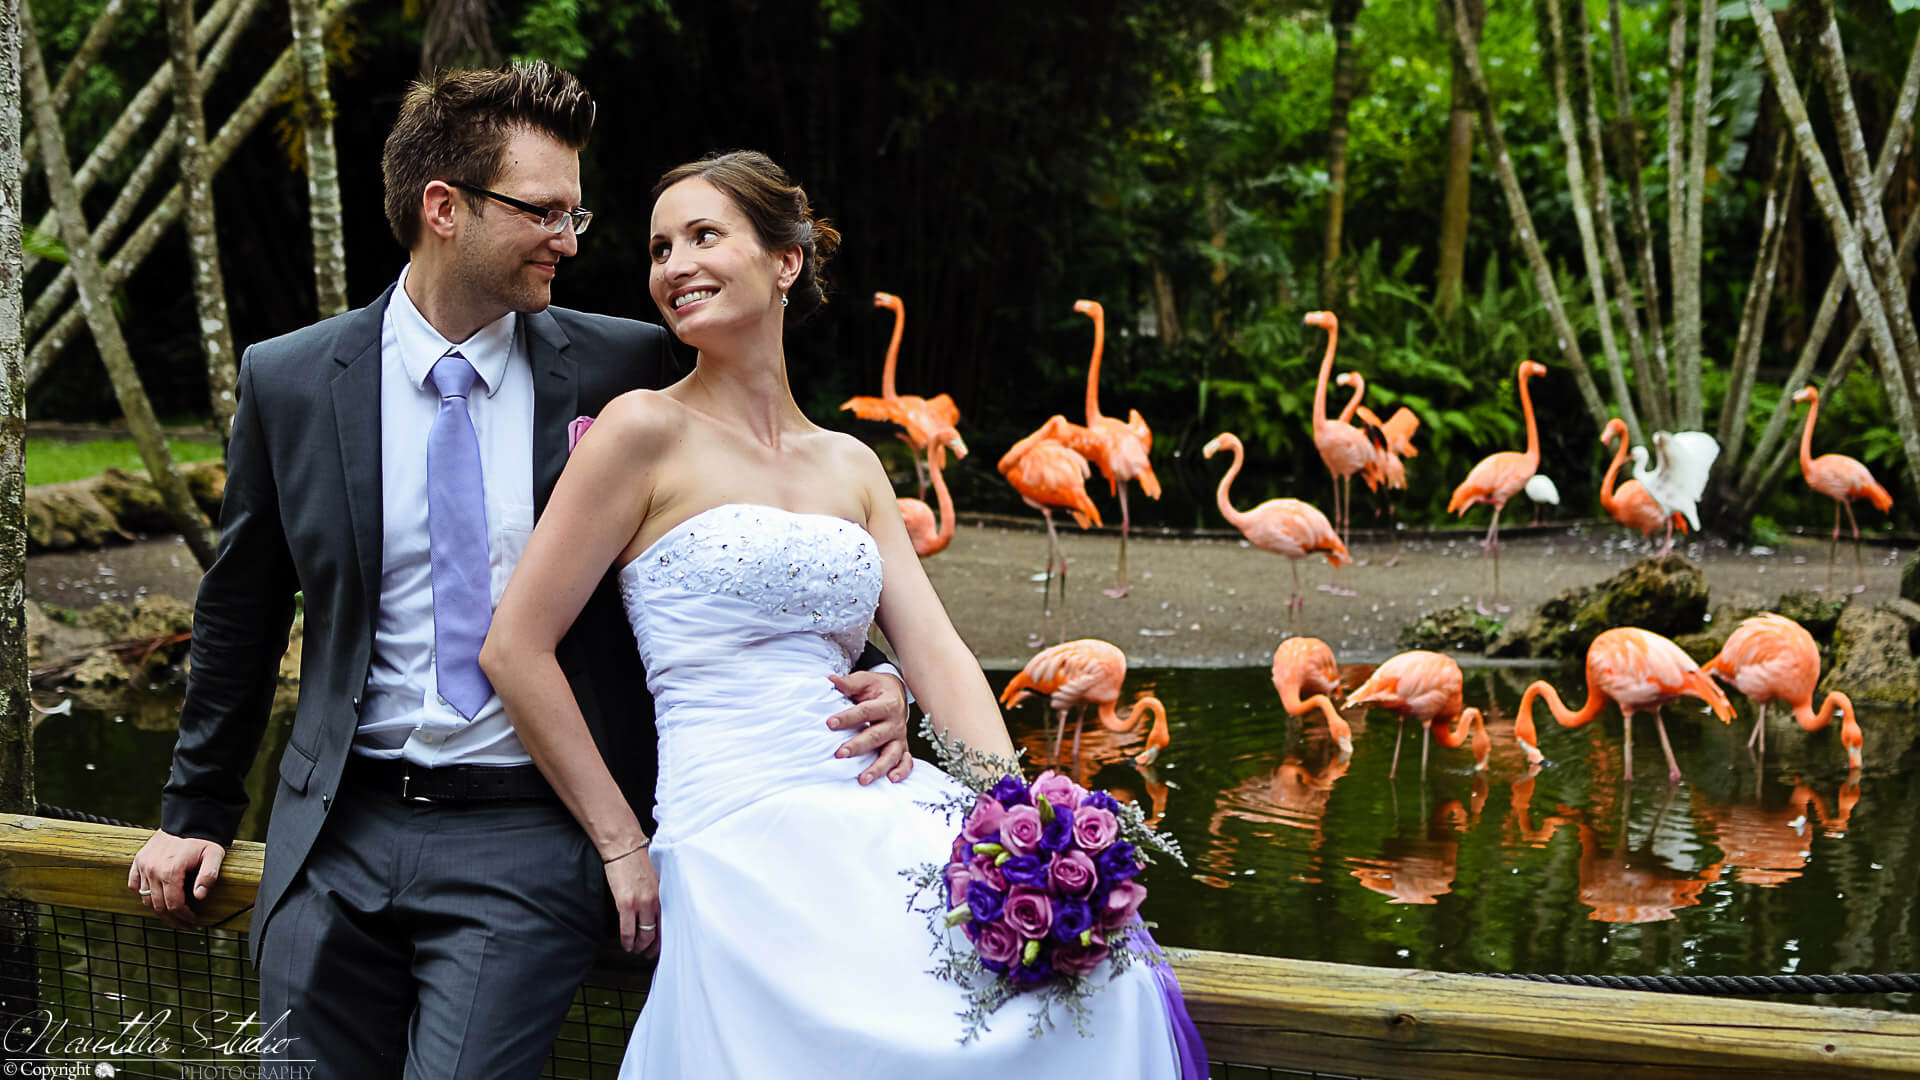 Florida garden wedding photo of bride and groom with flamingos